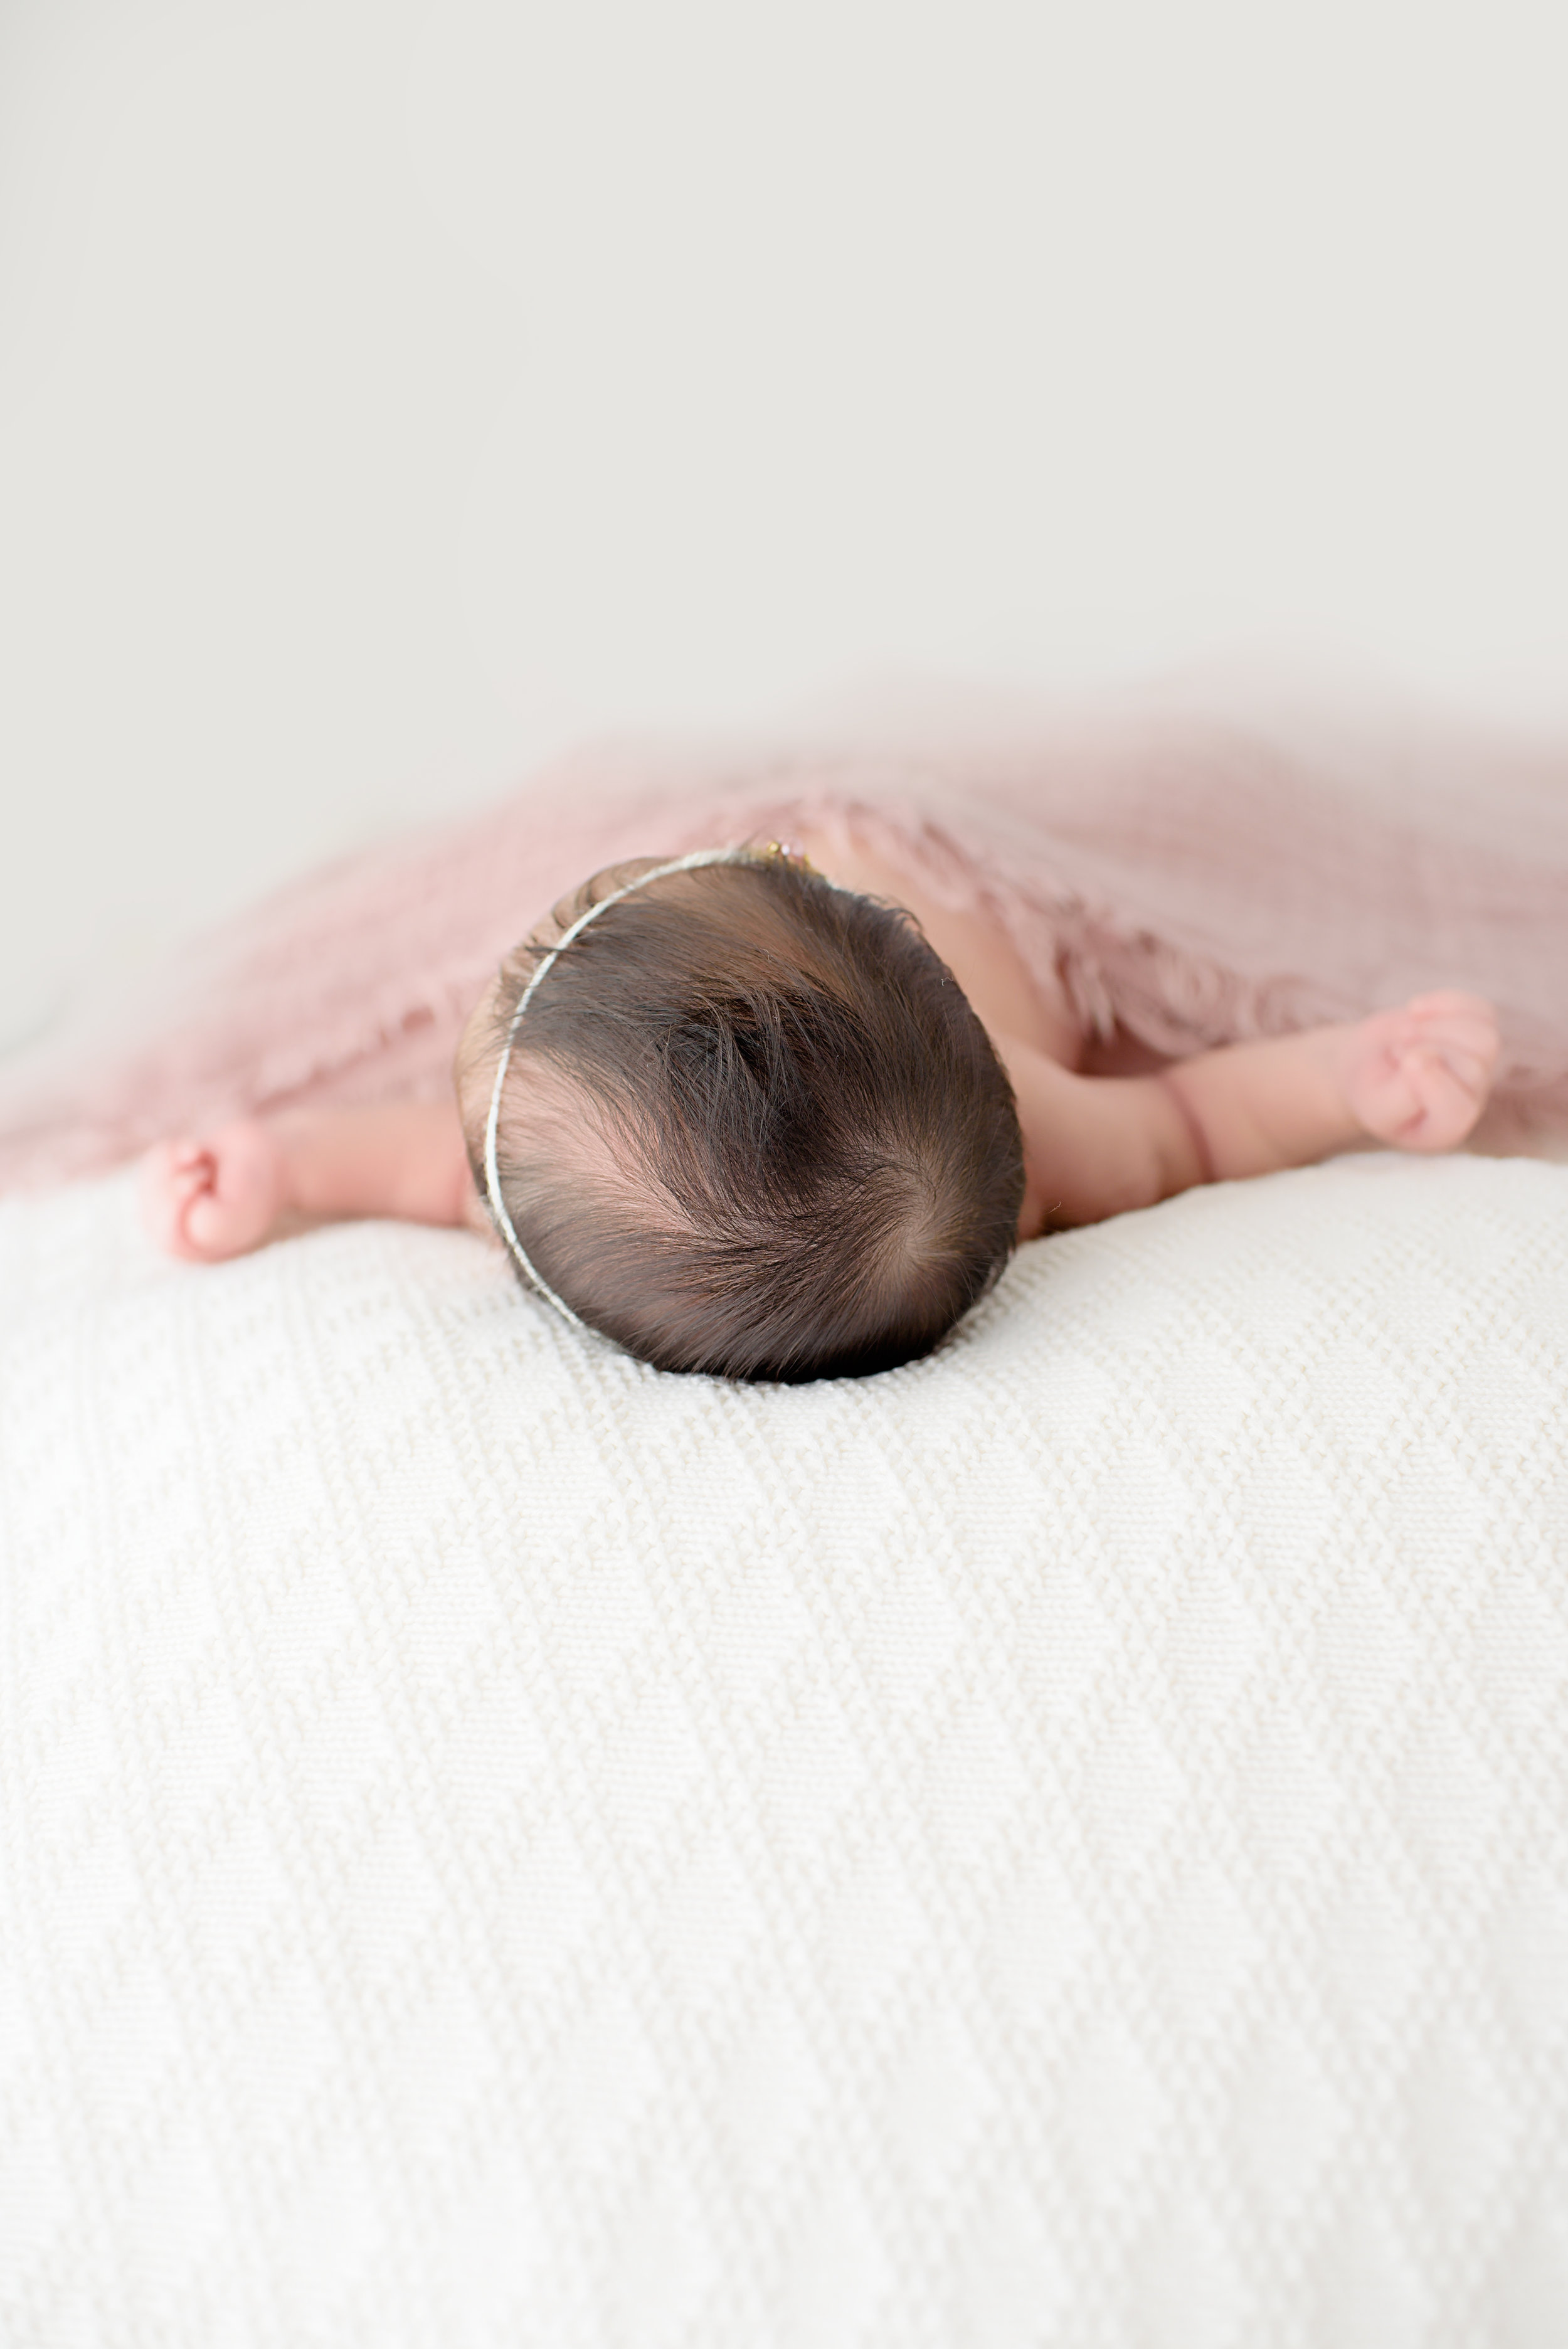 Charleston-Newborn-Photographer-Following-Seas-Photography-8841 copy.jpg